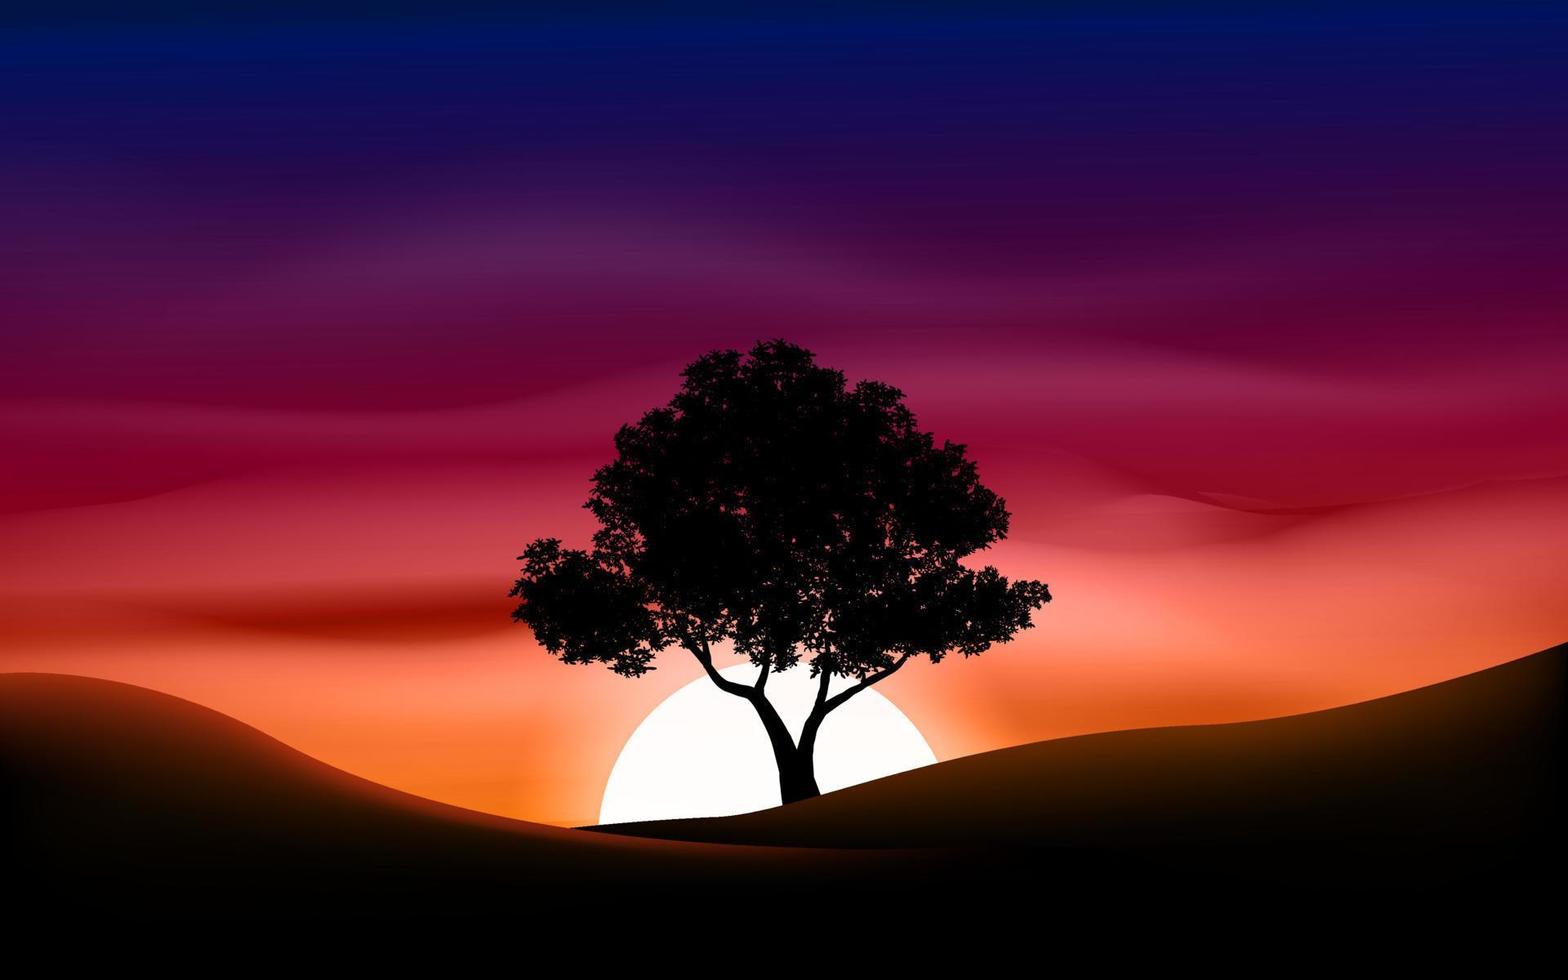 boomsilhouet op rode hemelzonsondergang of zonsopgang vector